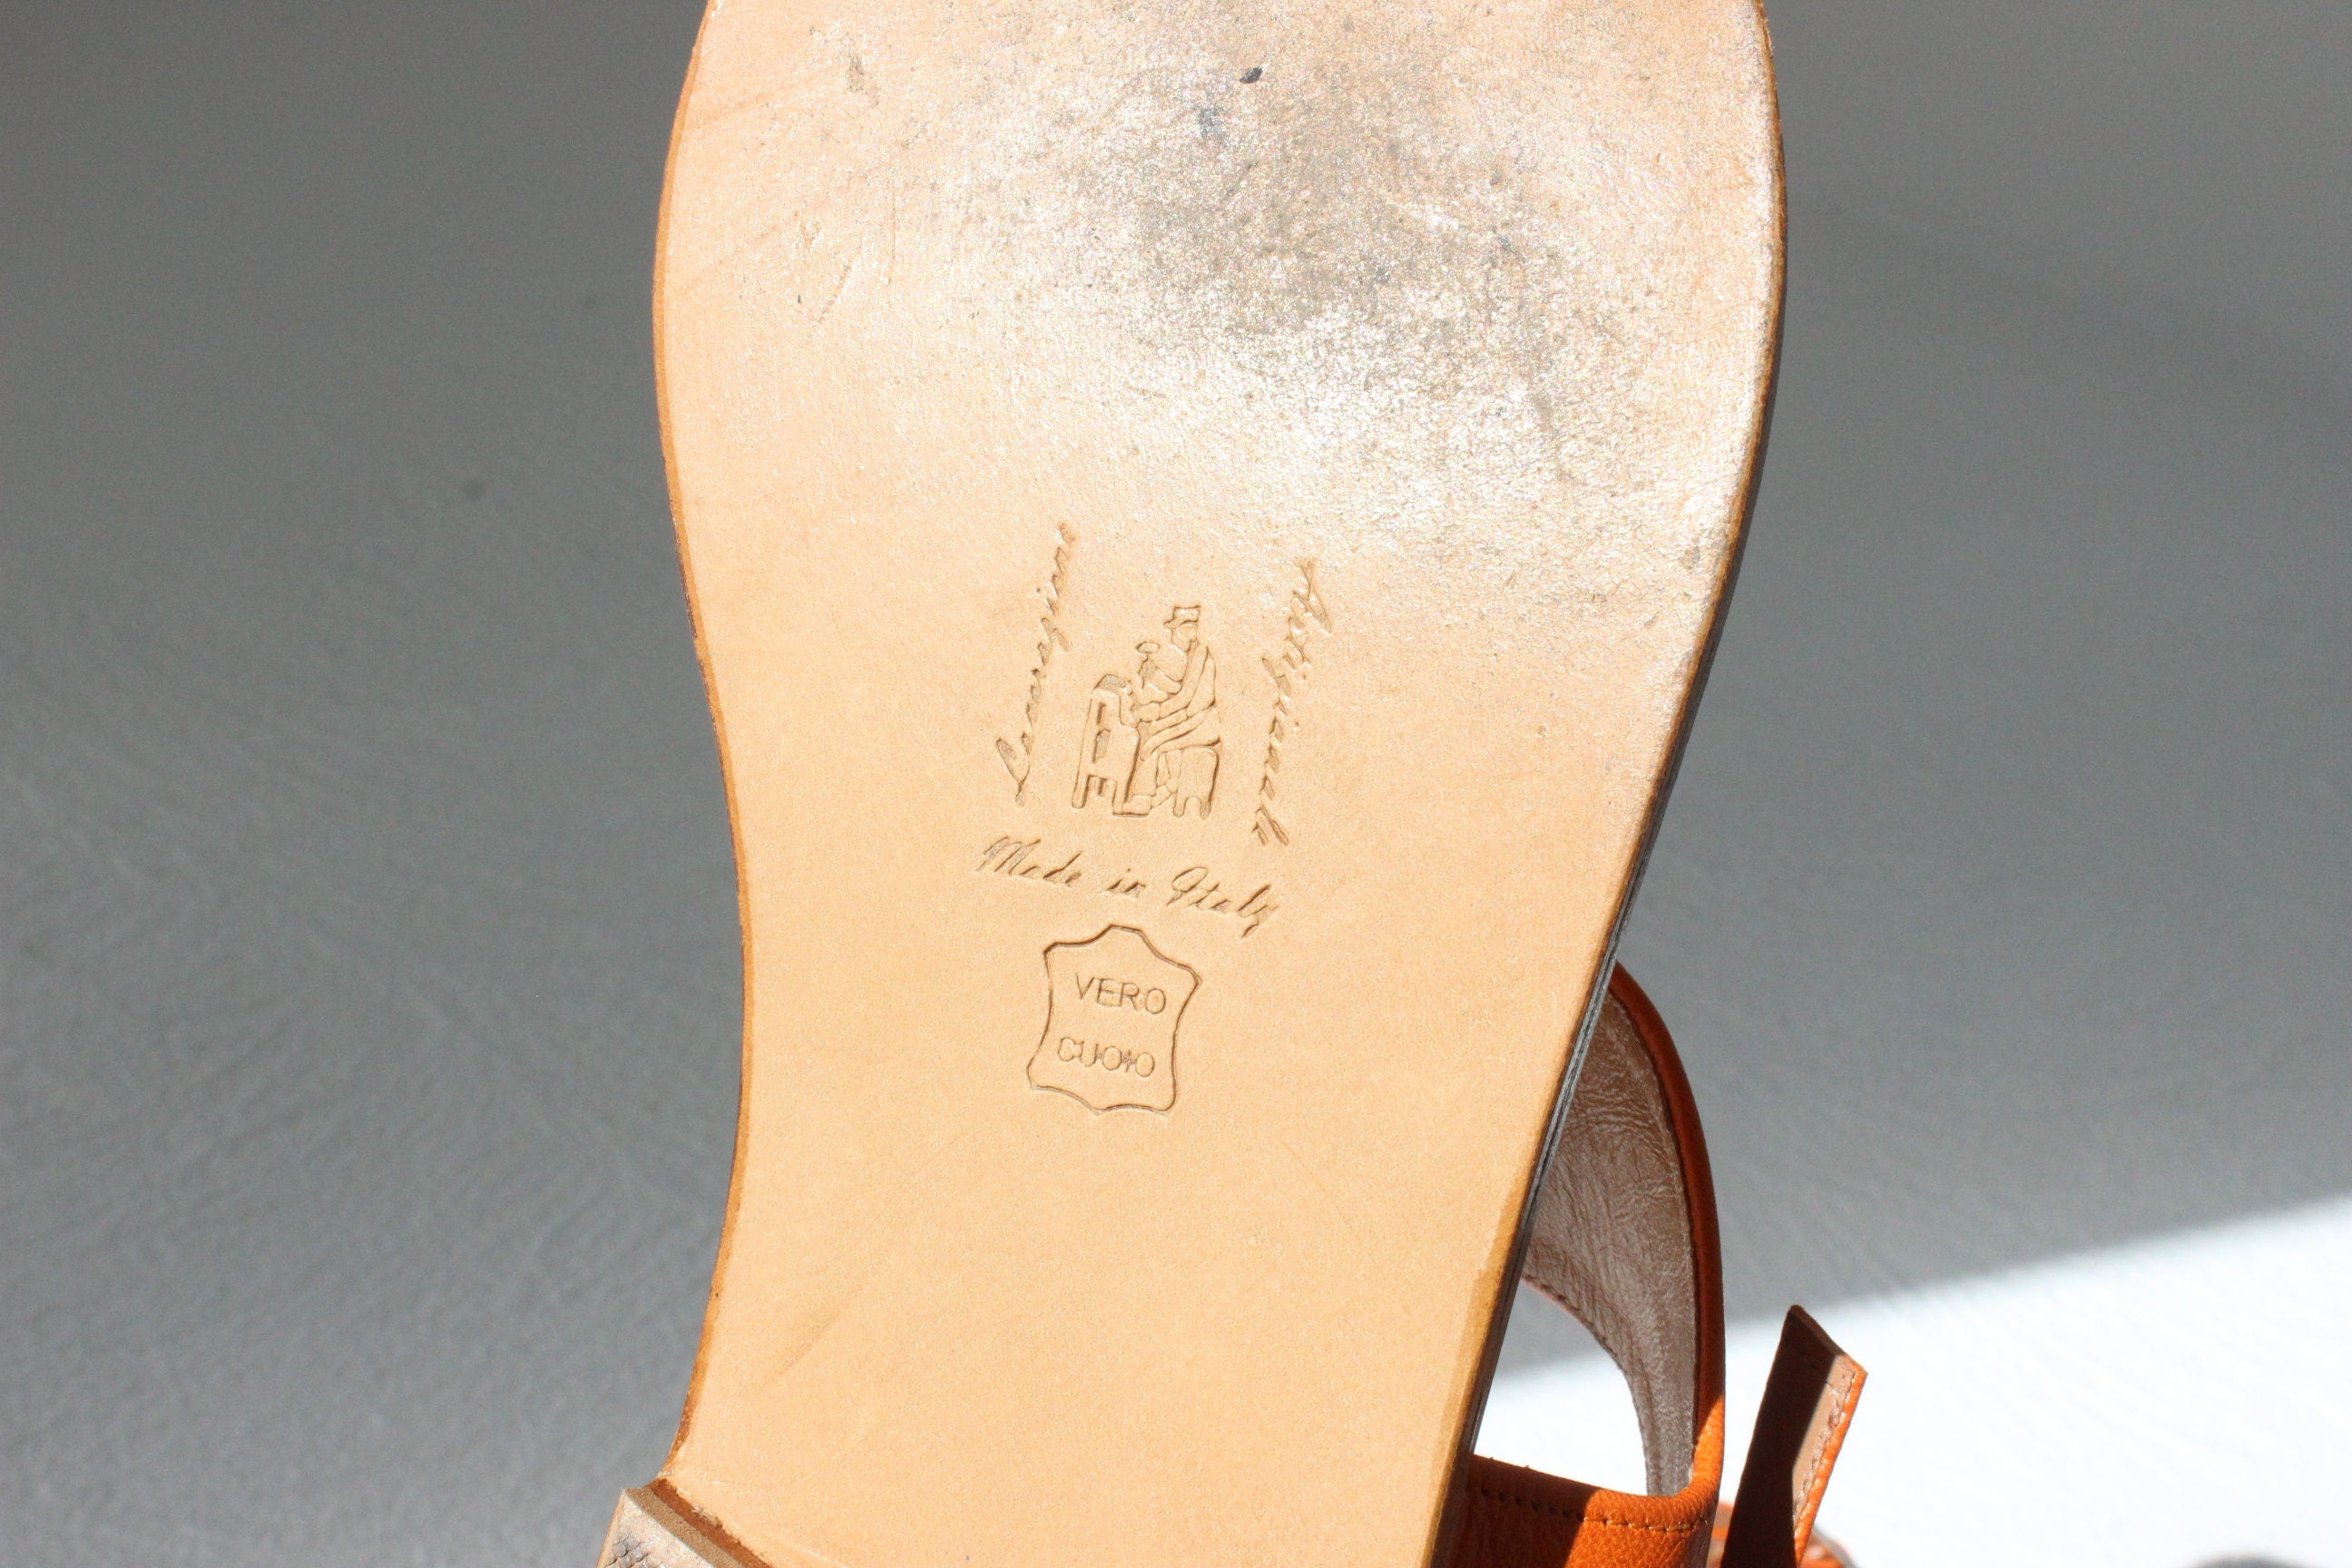 Custom Hand Made Italian L'Artiginale Orange Leather T-Bar Sandals ~ Euro 39.5